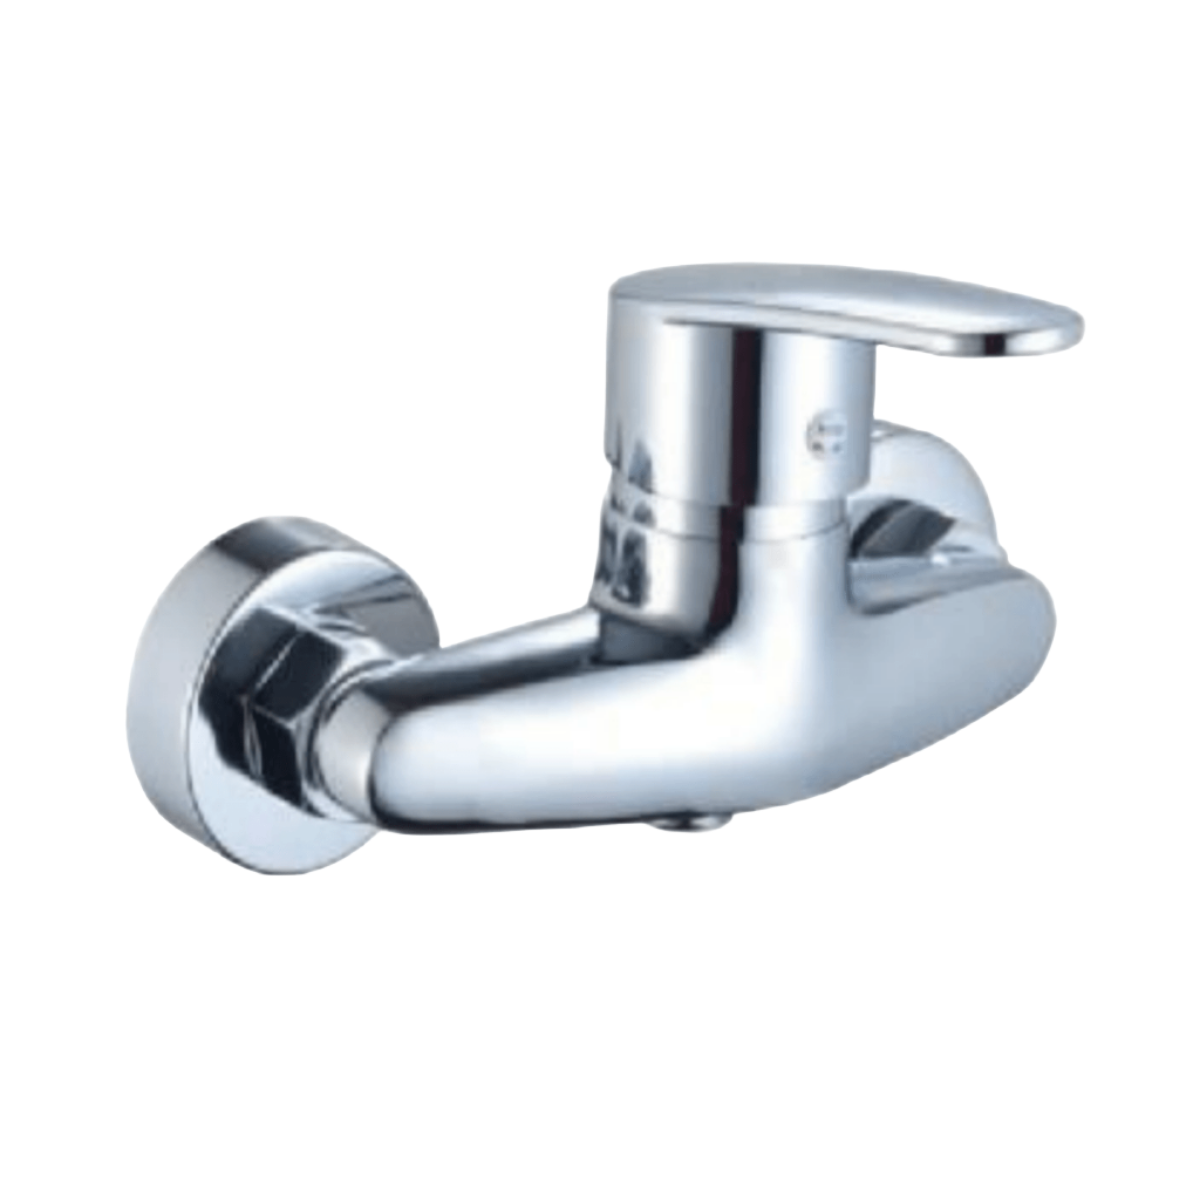 Buy Bathroom Chrome Hot & Cold Shower Faucet Mixer - CS31 GP | Shop at Supply Master Accra, Ghana Bathroom Faucet Buy Tools hardware Building materials